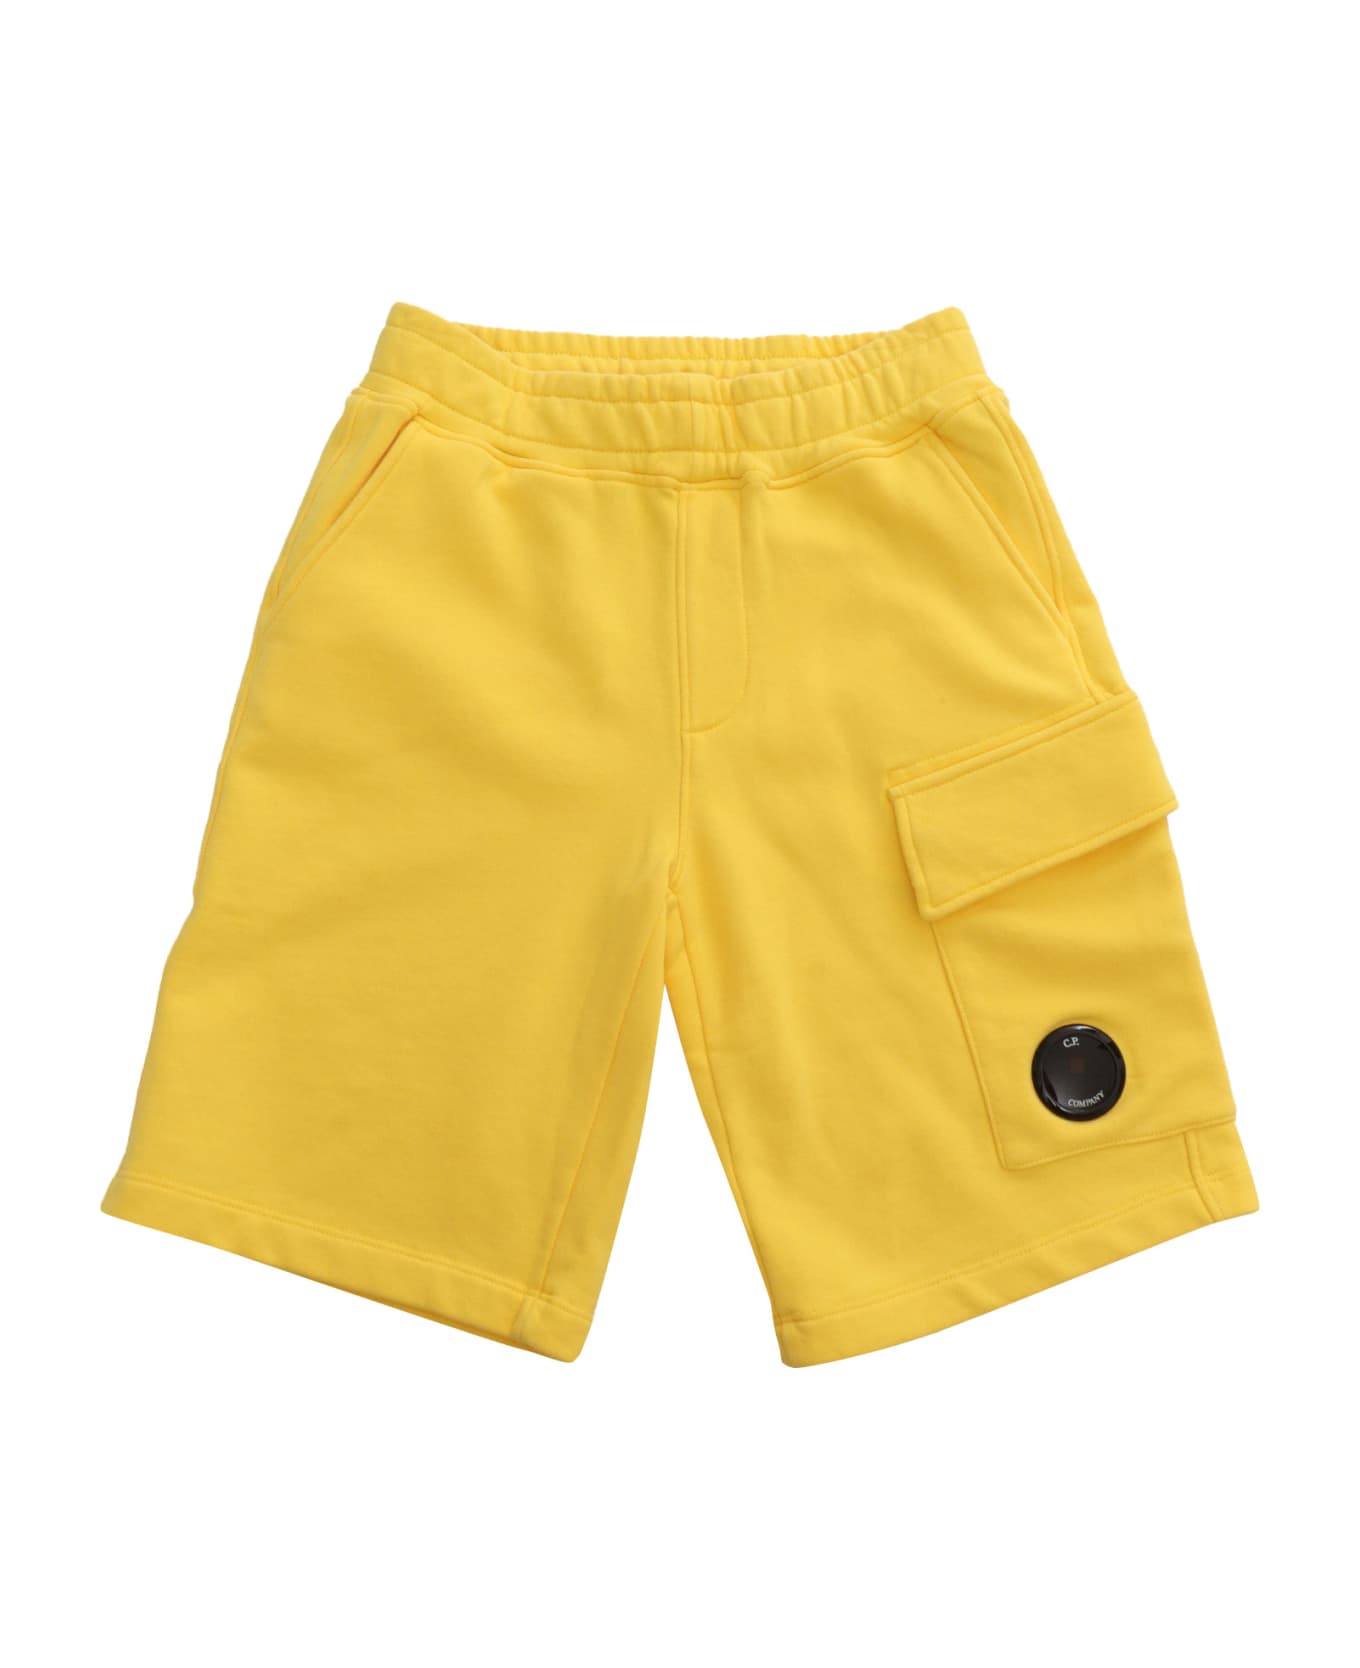 C.P. Company Undersixteen Yellow Fleece Shorts - YELLOW